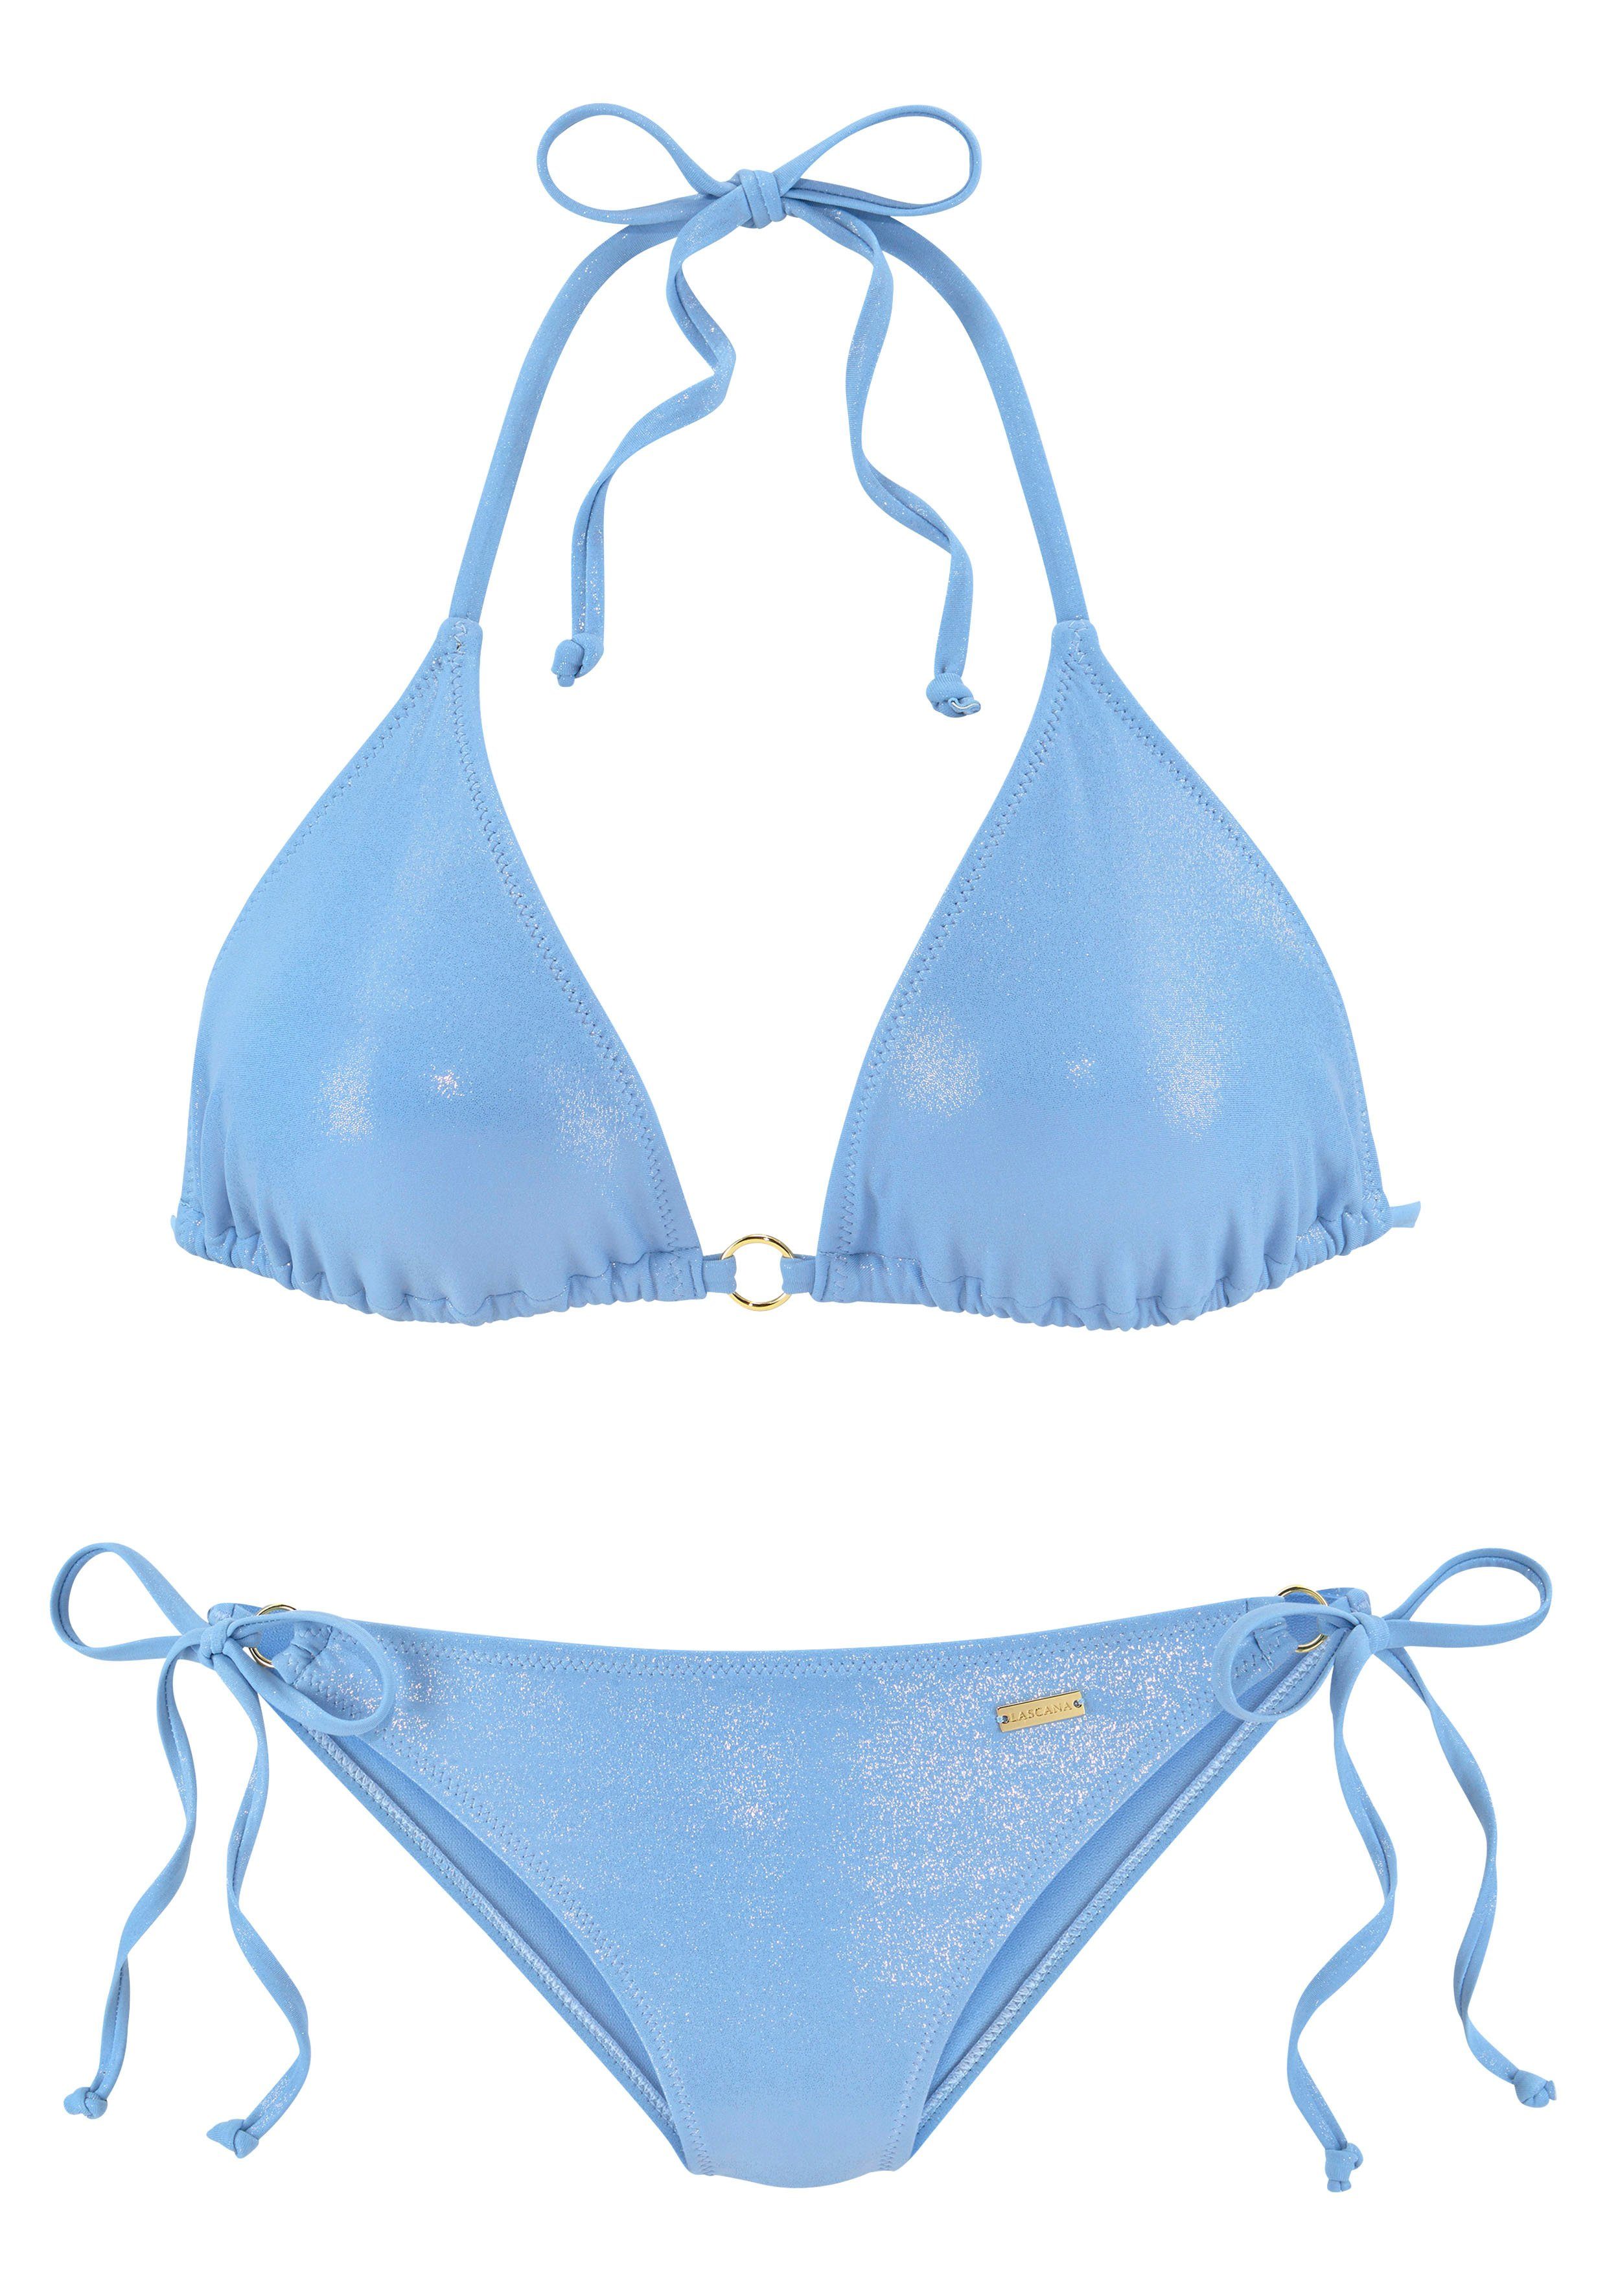 Glanzbeschichtung goldfarbener mit LASCANA Triangel-Bikini hellblau